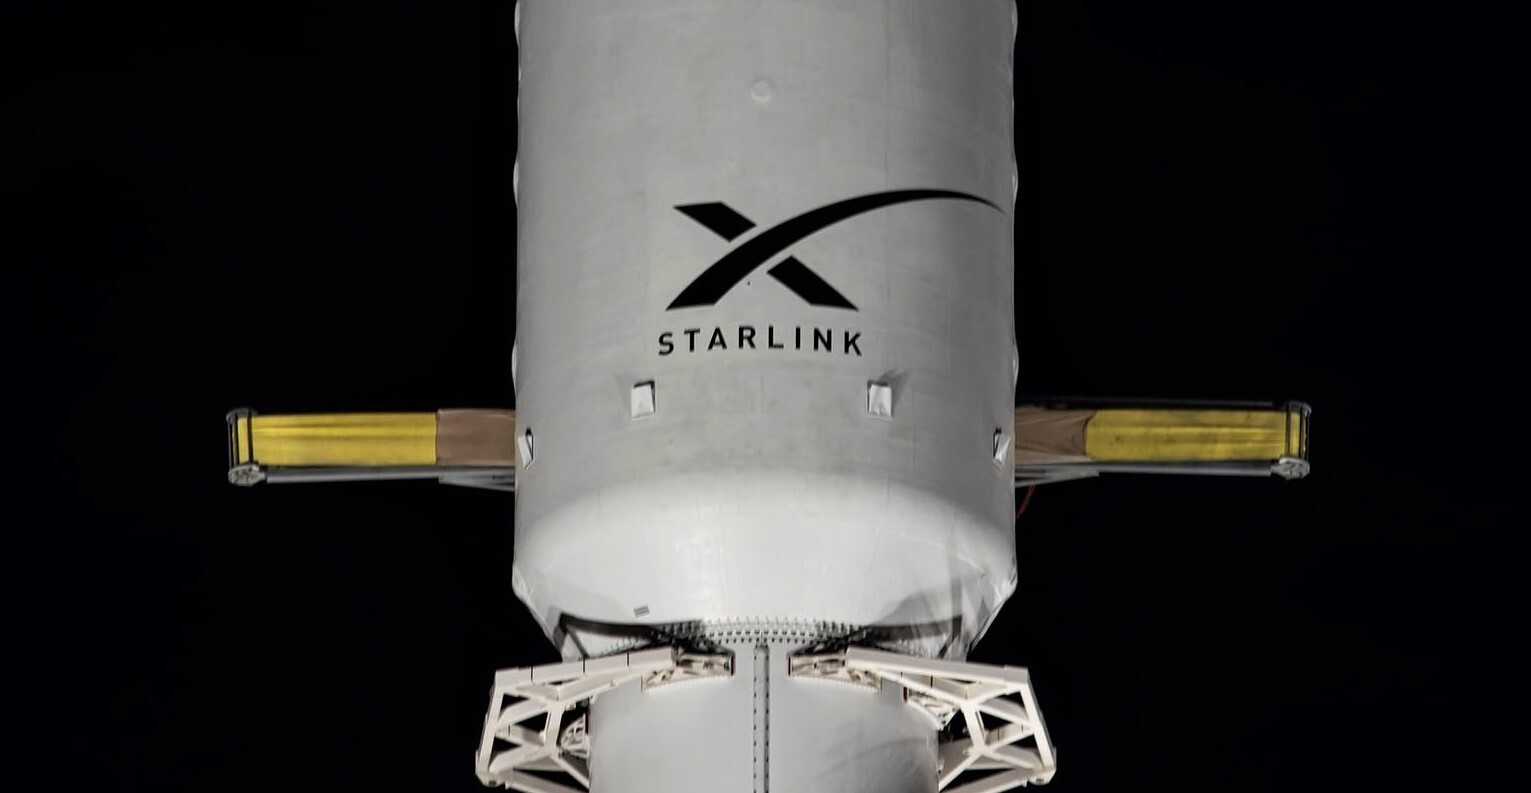 starlink-1-falcon-9-b1048-lc-40-vertical-111019-spacex-1-fairing-2-1